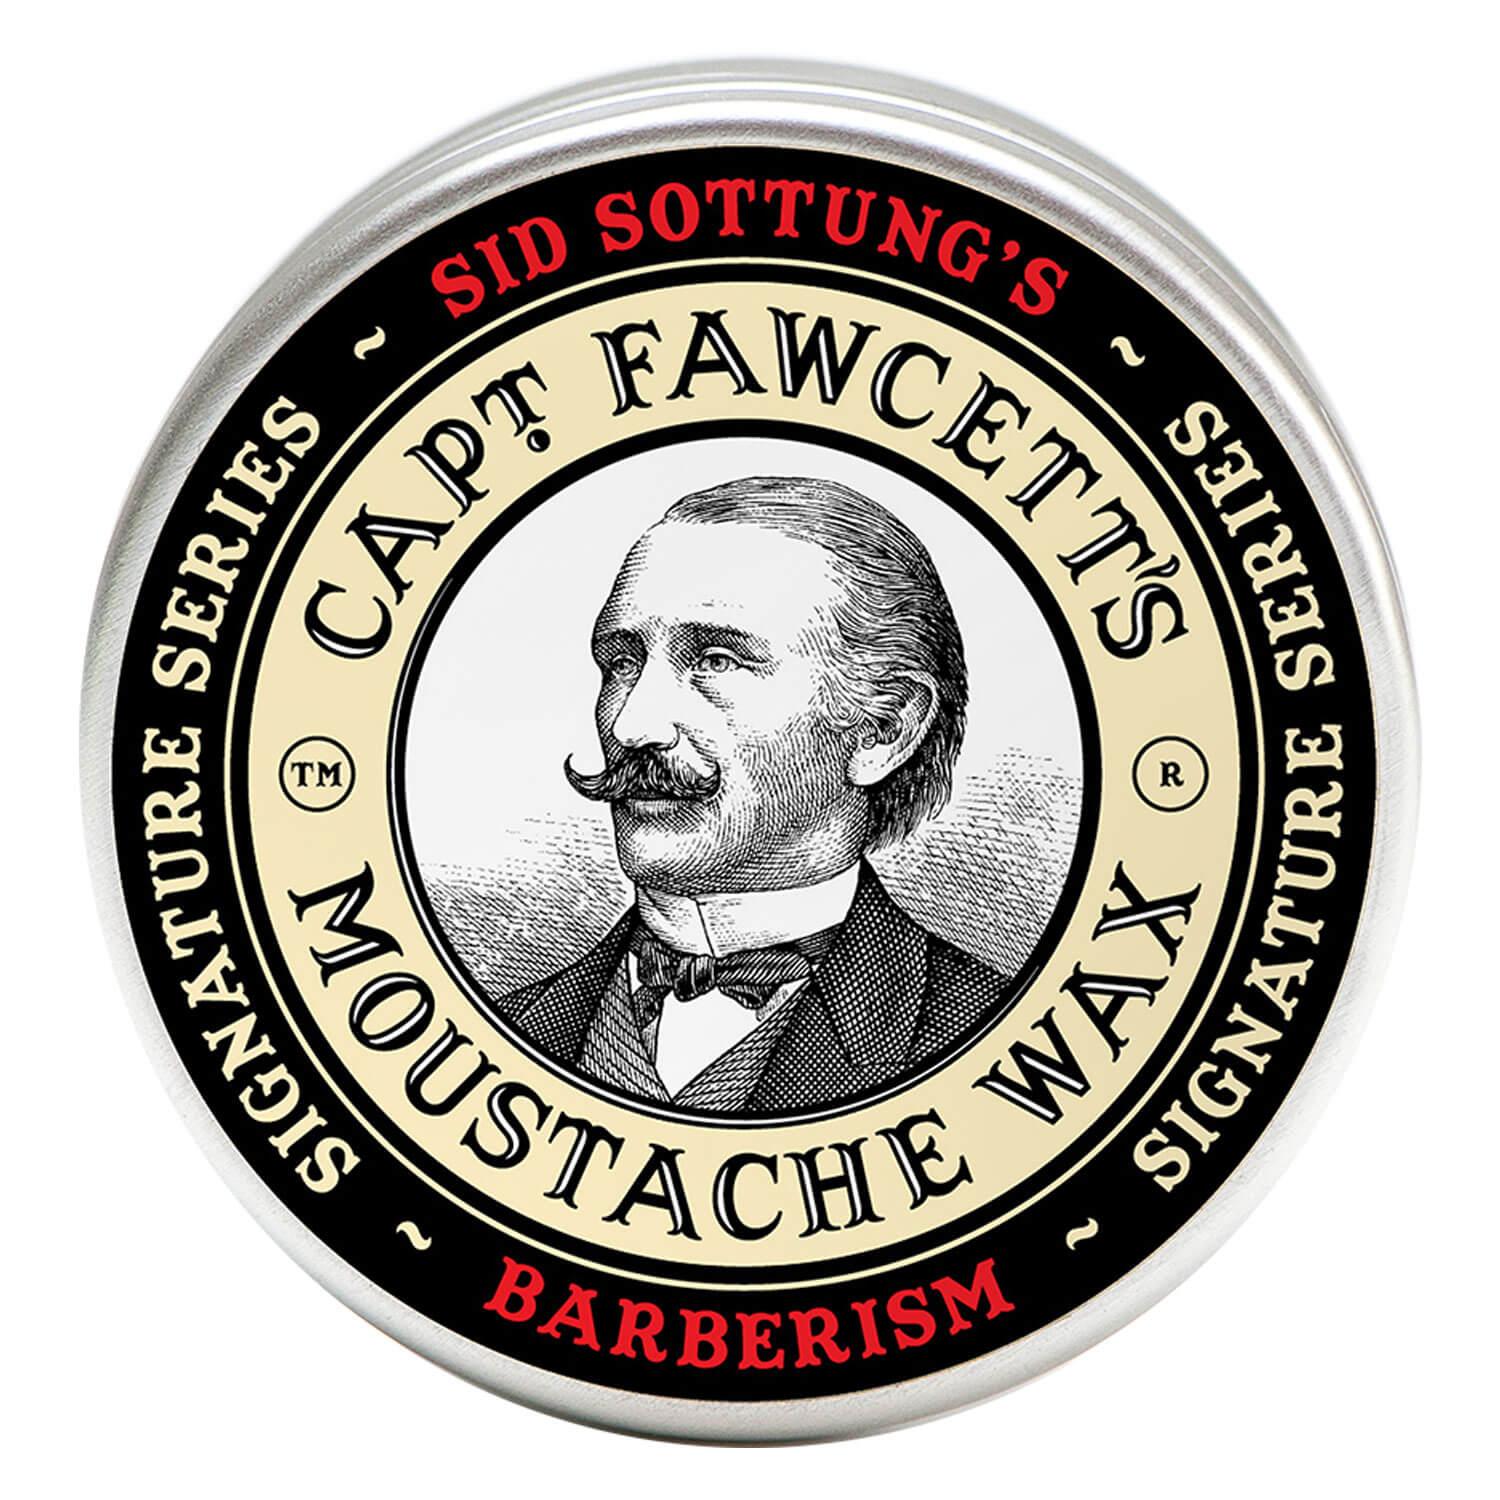 Capt. Fawcett Care - Sid Sottung's Barberism Moustache Wax